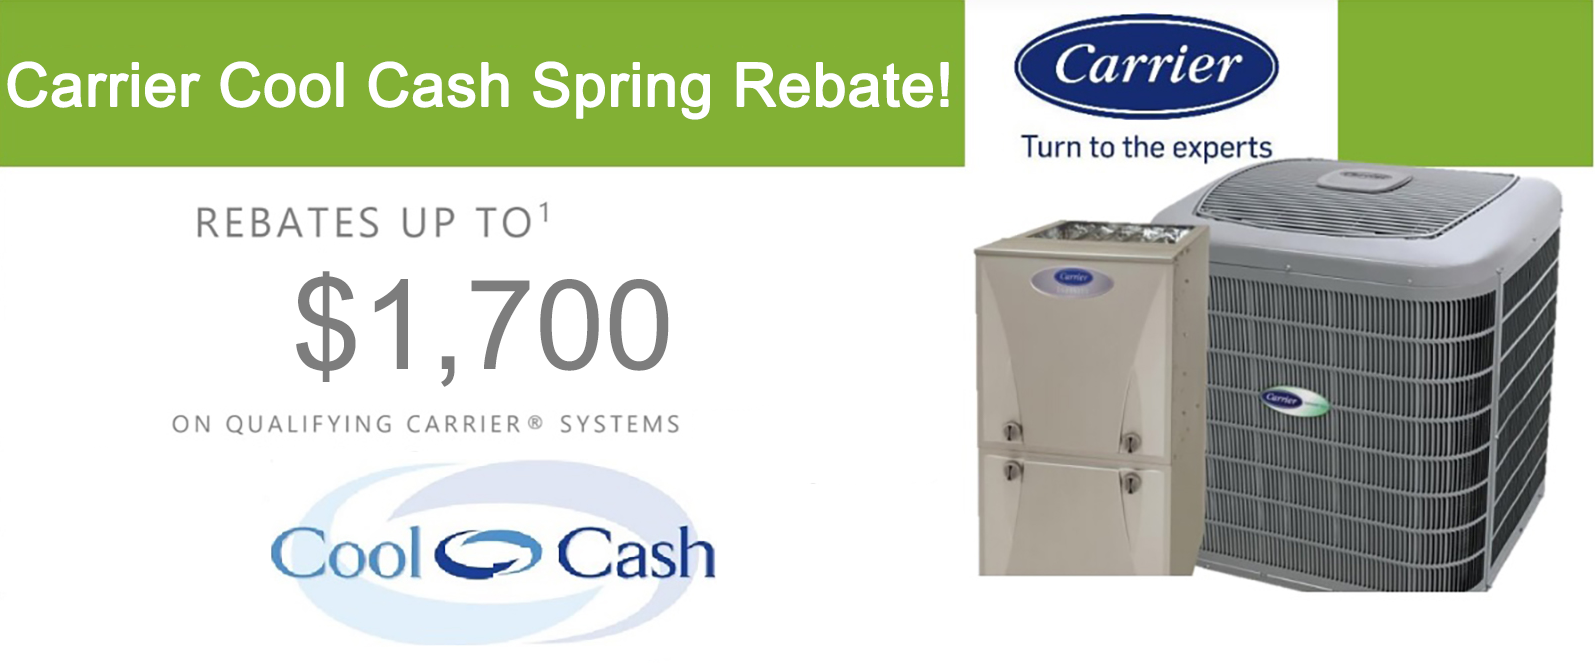 Carrier Cool Cash Spring Rebate Banner